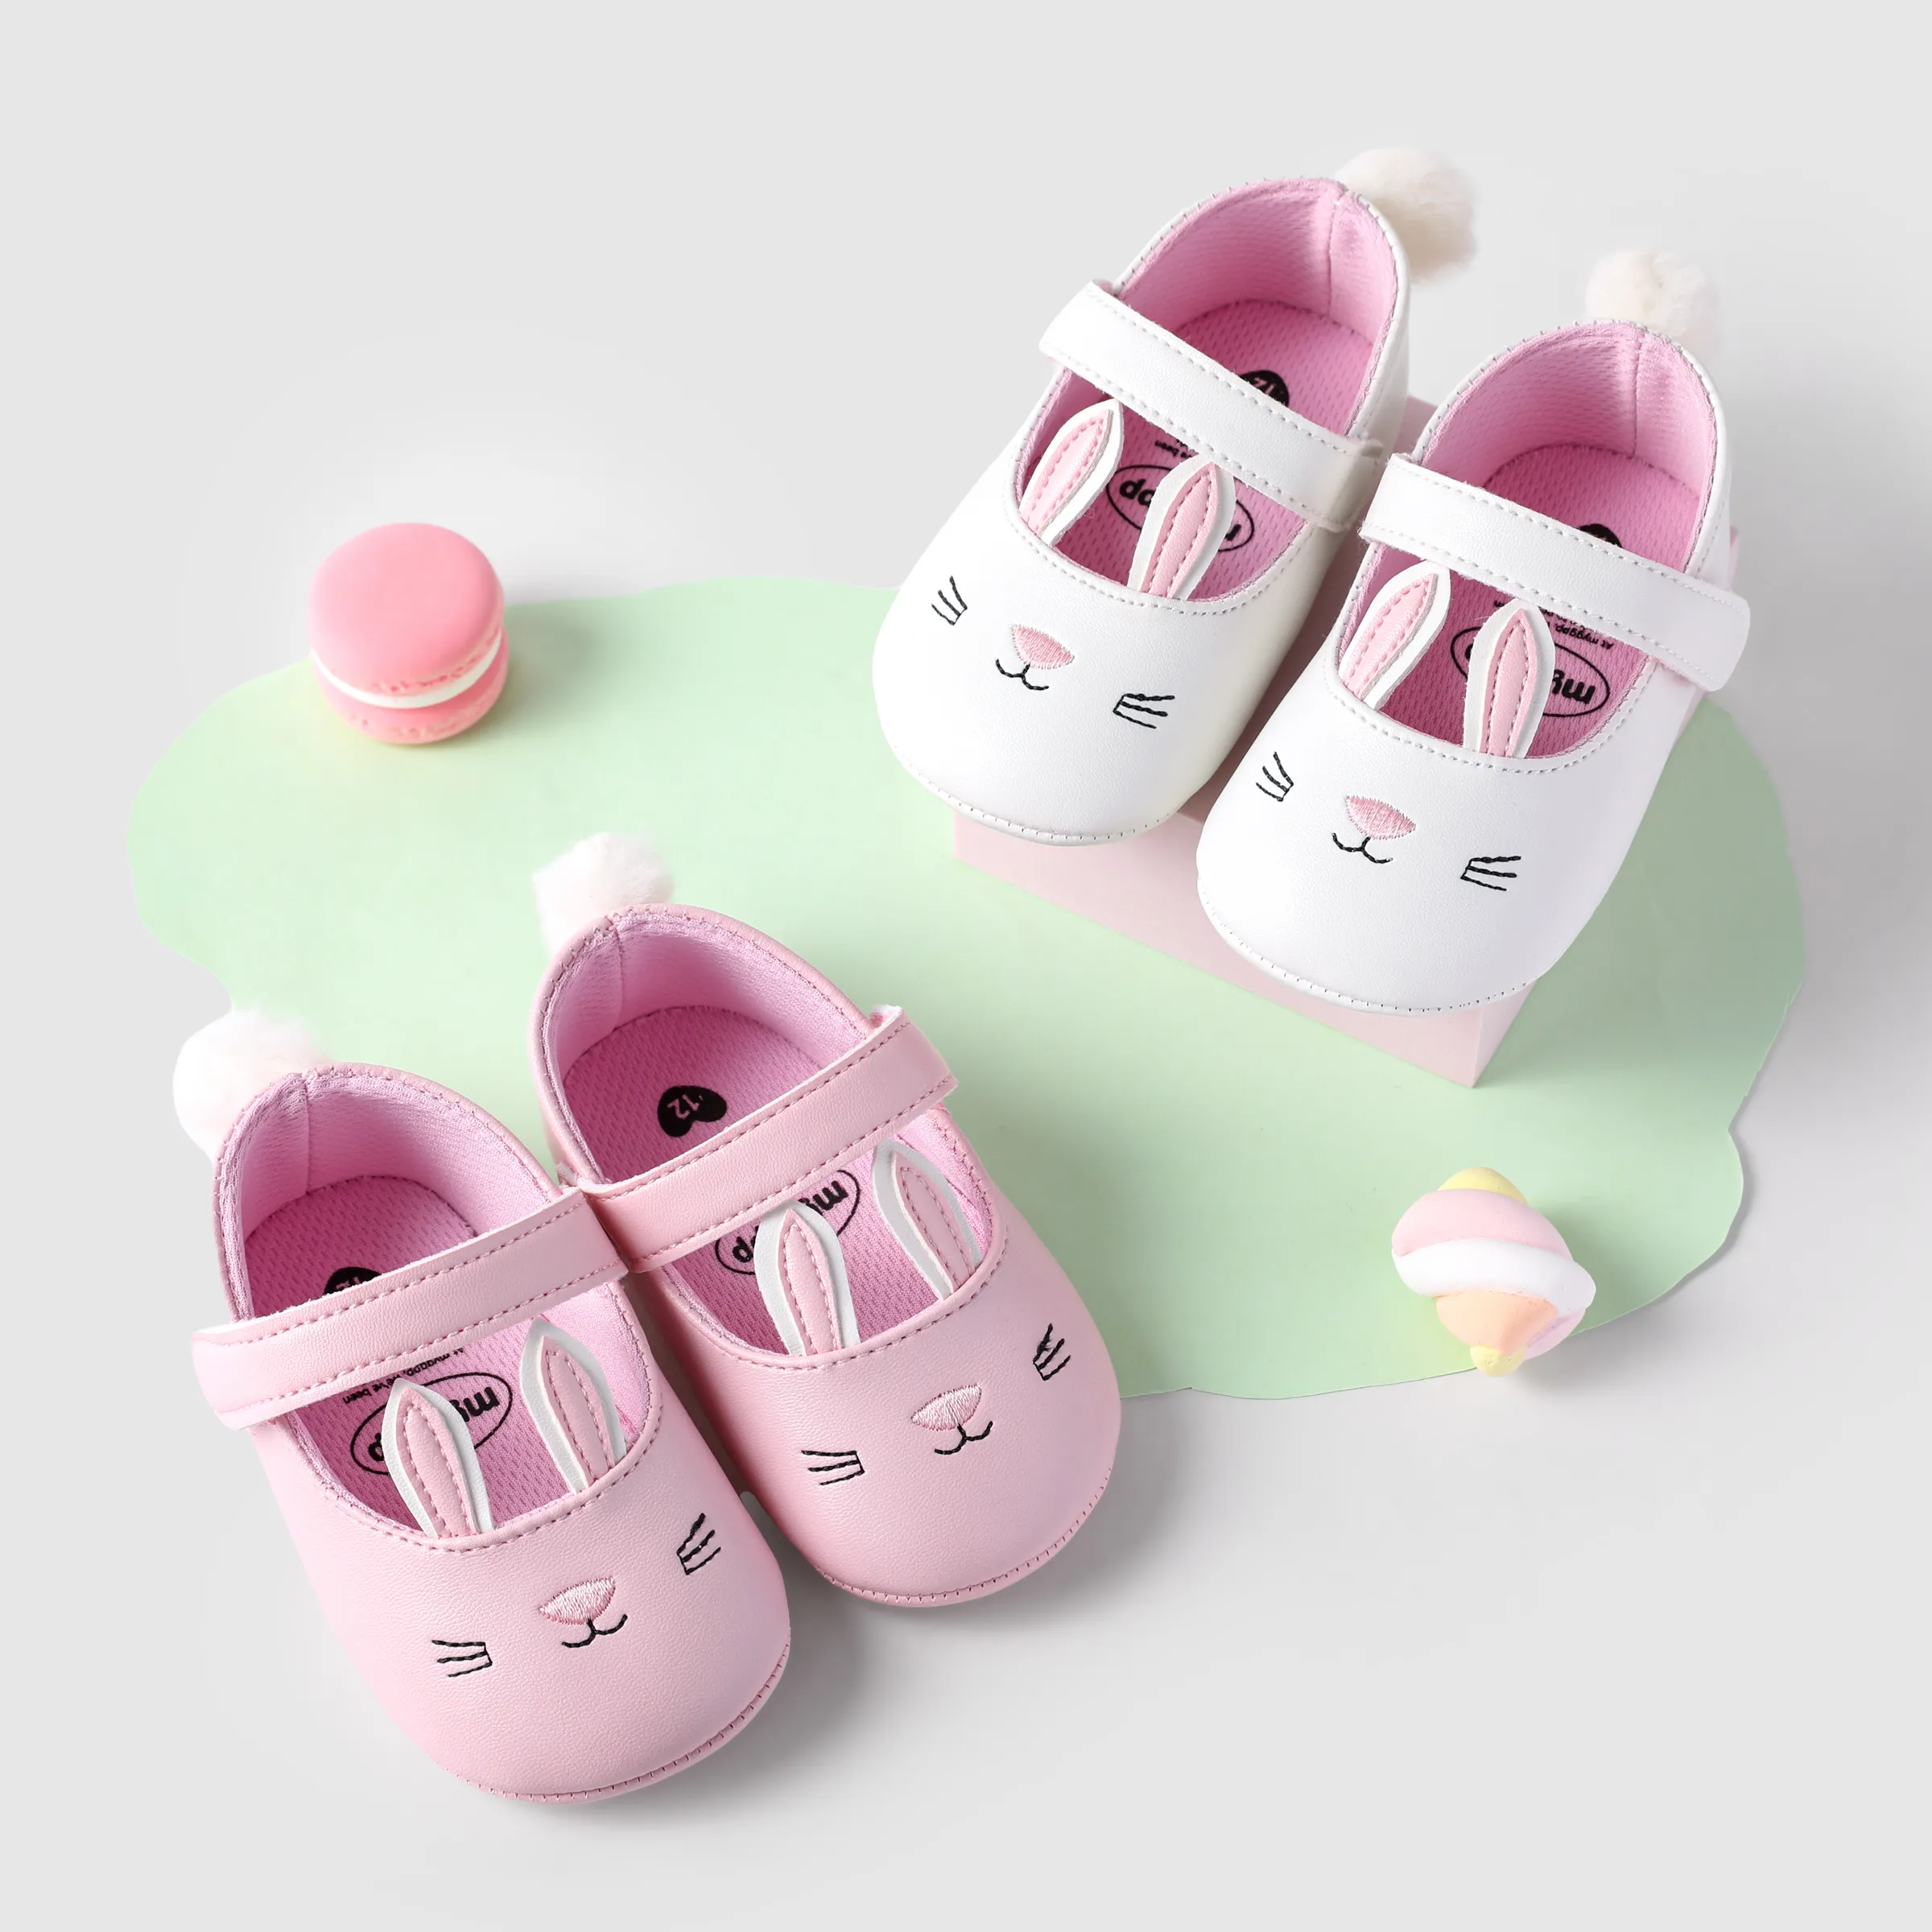 

Baby Girl Hyper-Tactile 3D Rabbit Prewalker Shoes